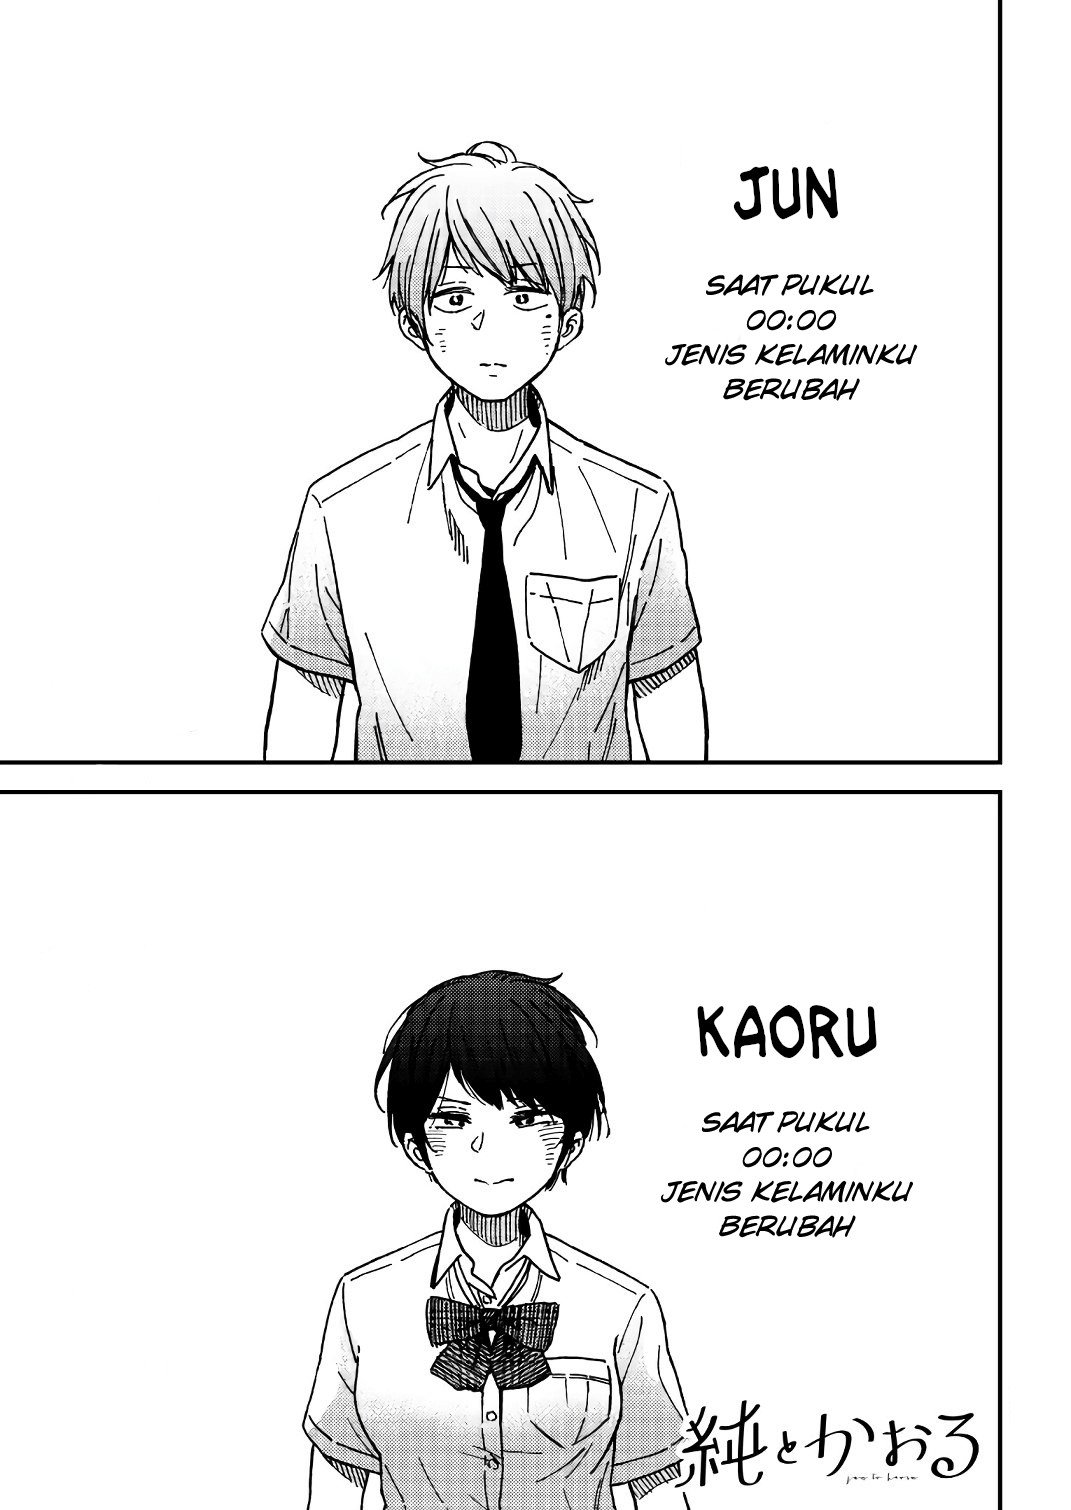 Jun and Kaoru: Pure and Fragrant Chapter 02